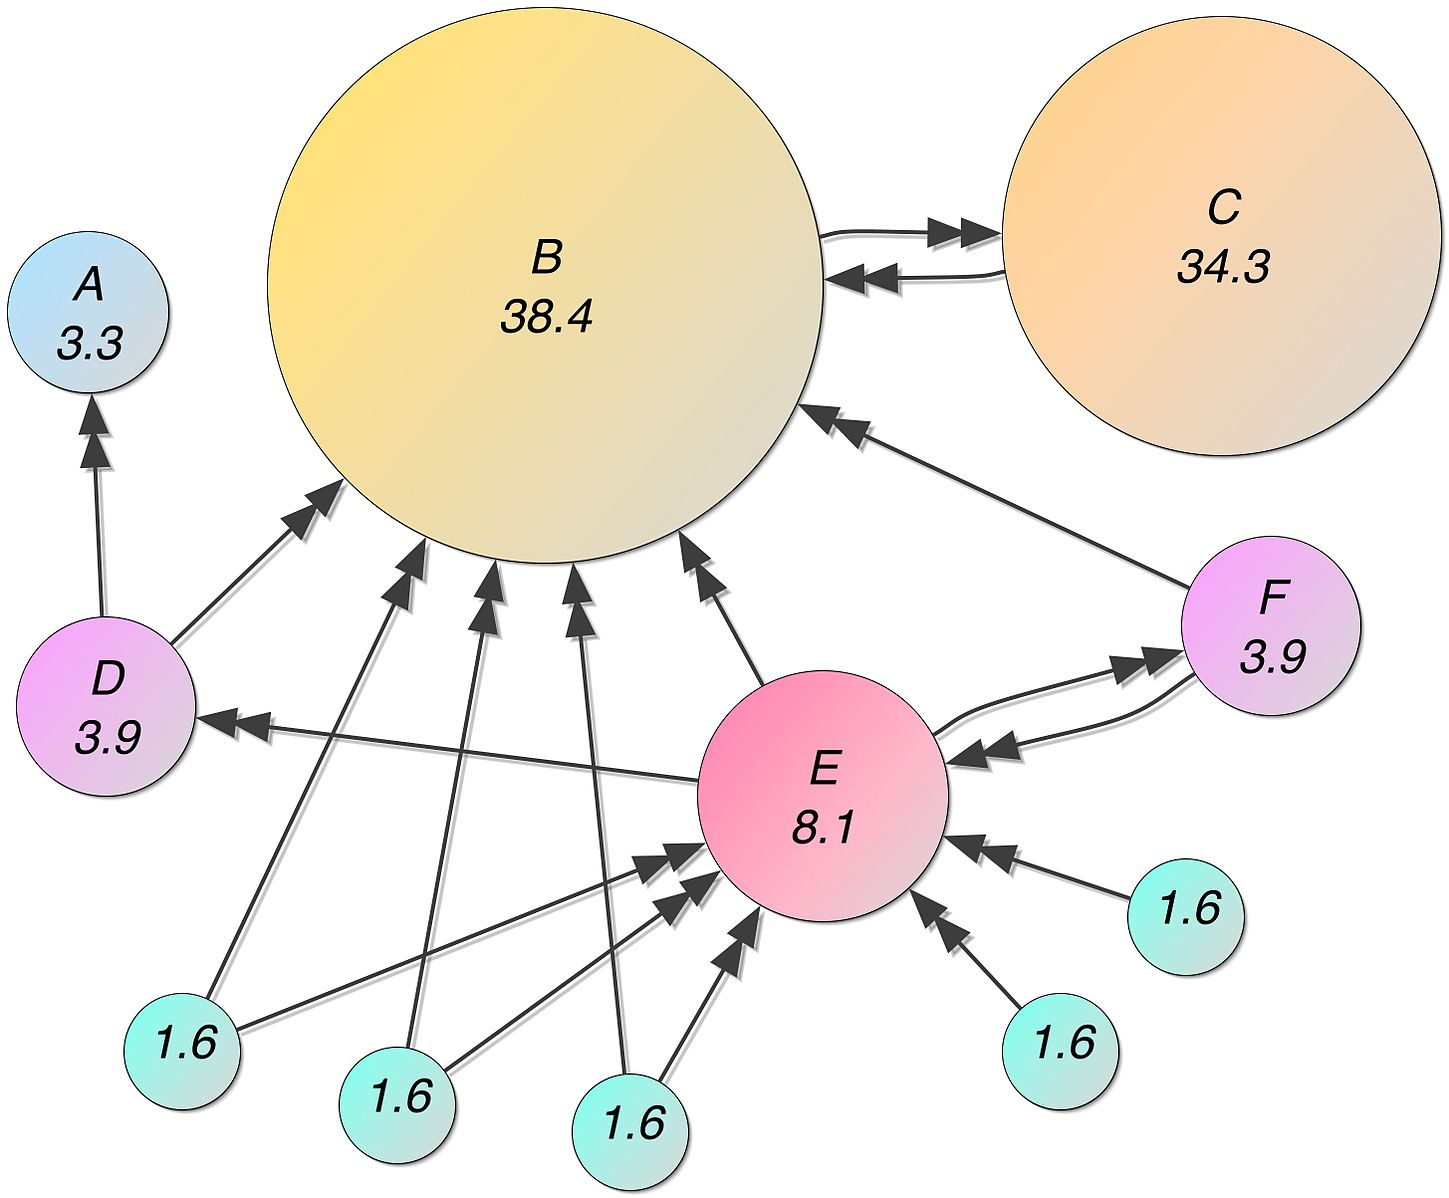 visual representation of the pagerank algorithm